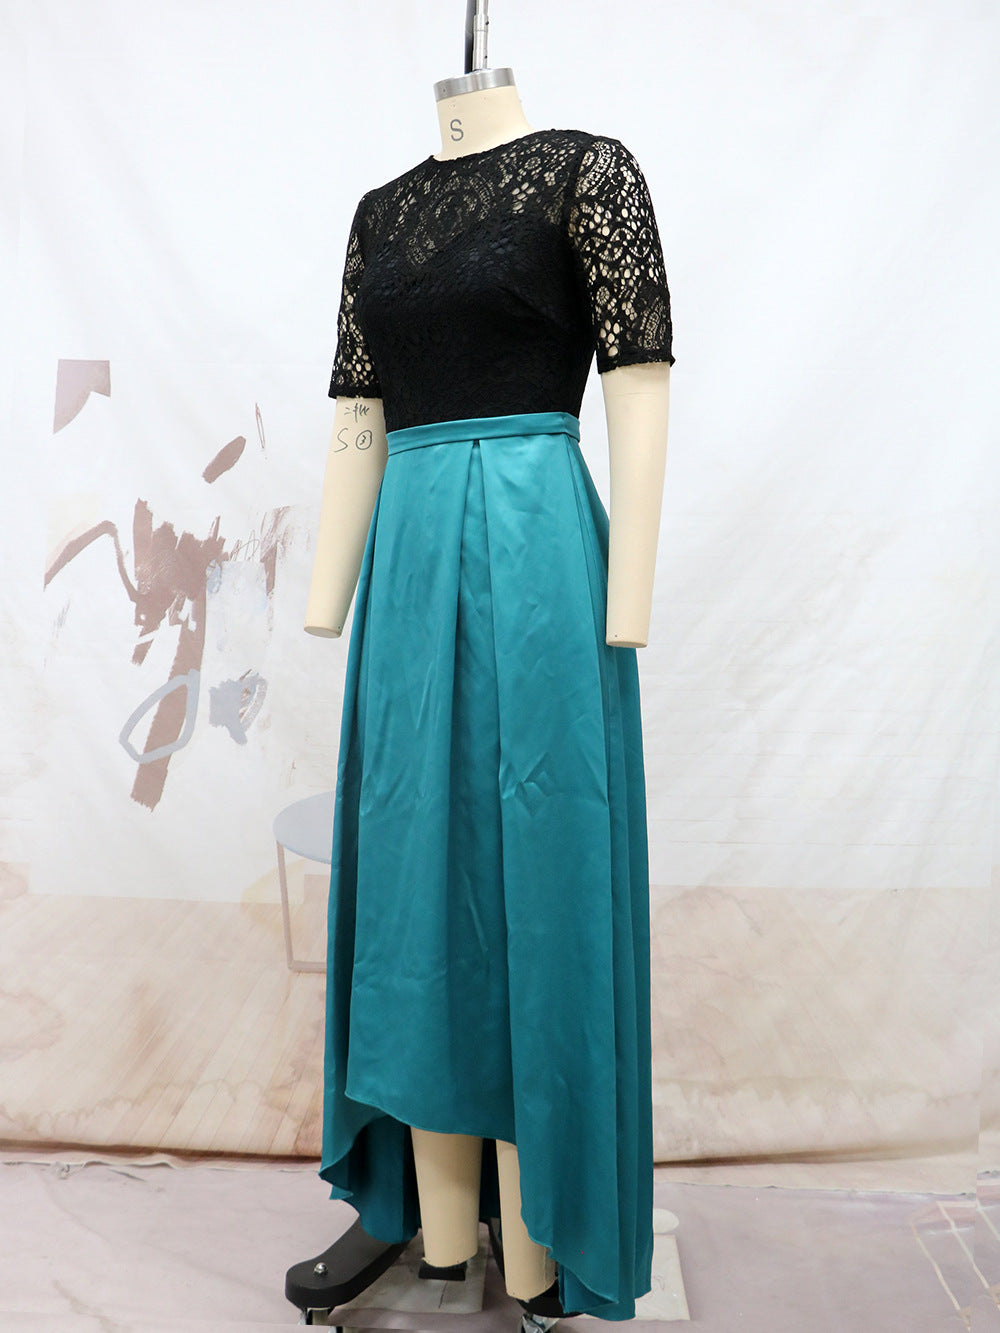 Elegant Asymmetrical Lace Party Dresses-Dresses-Blue-S-Free Shipping Leatheretro